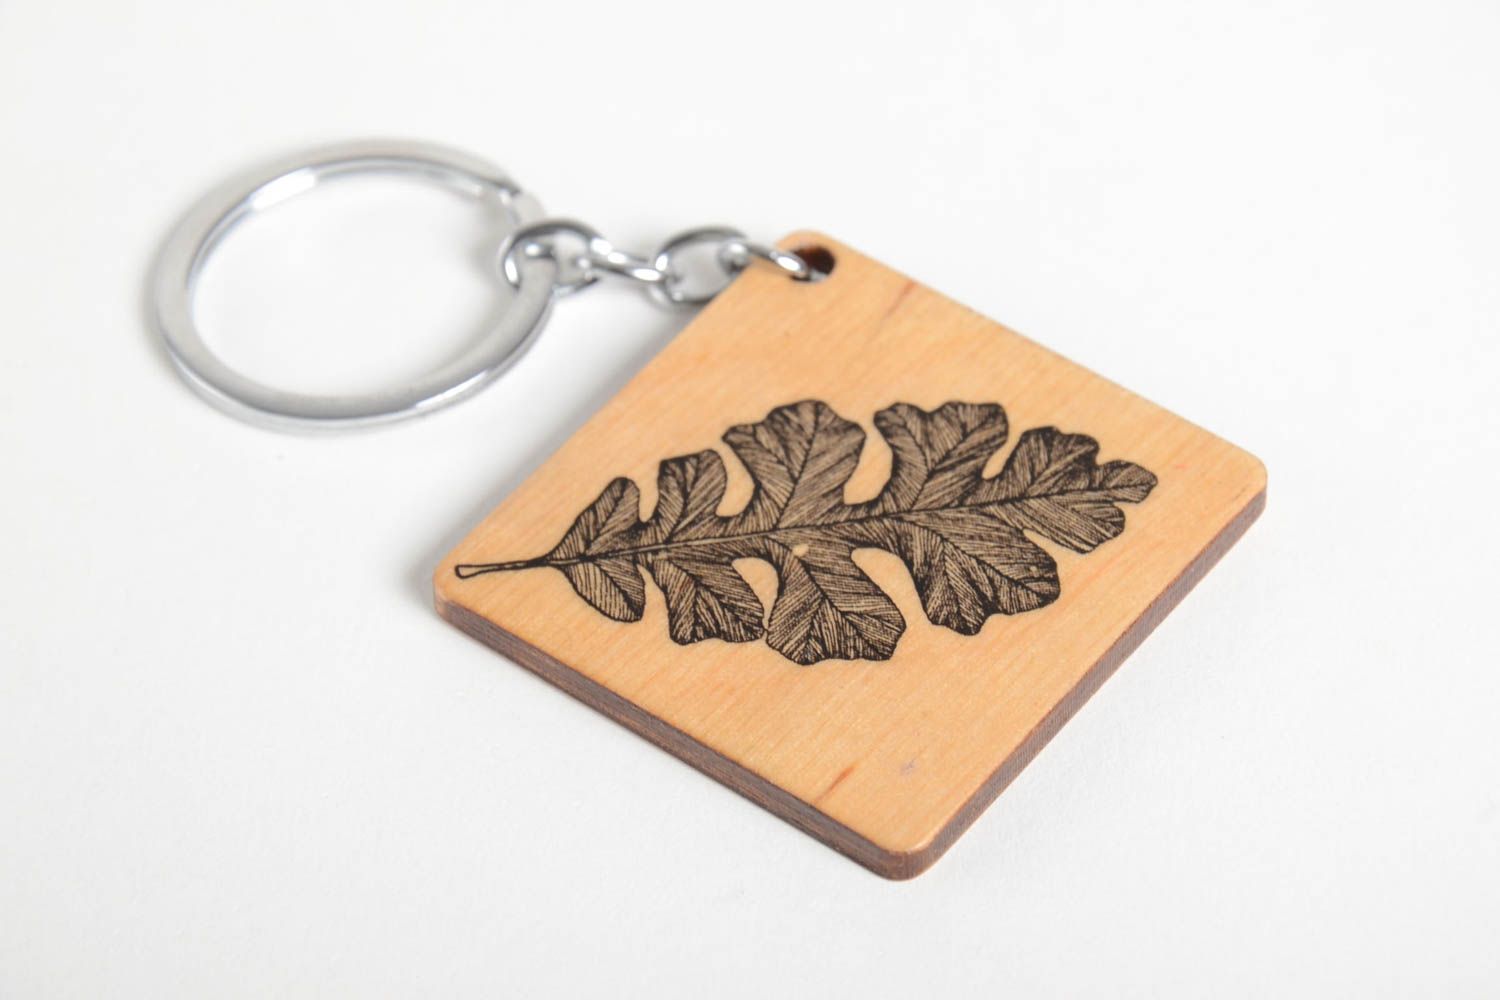 Handmade keychain unusual keychain for phone gift ideas wooden souvenir photo 5